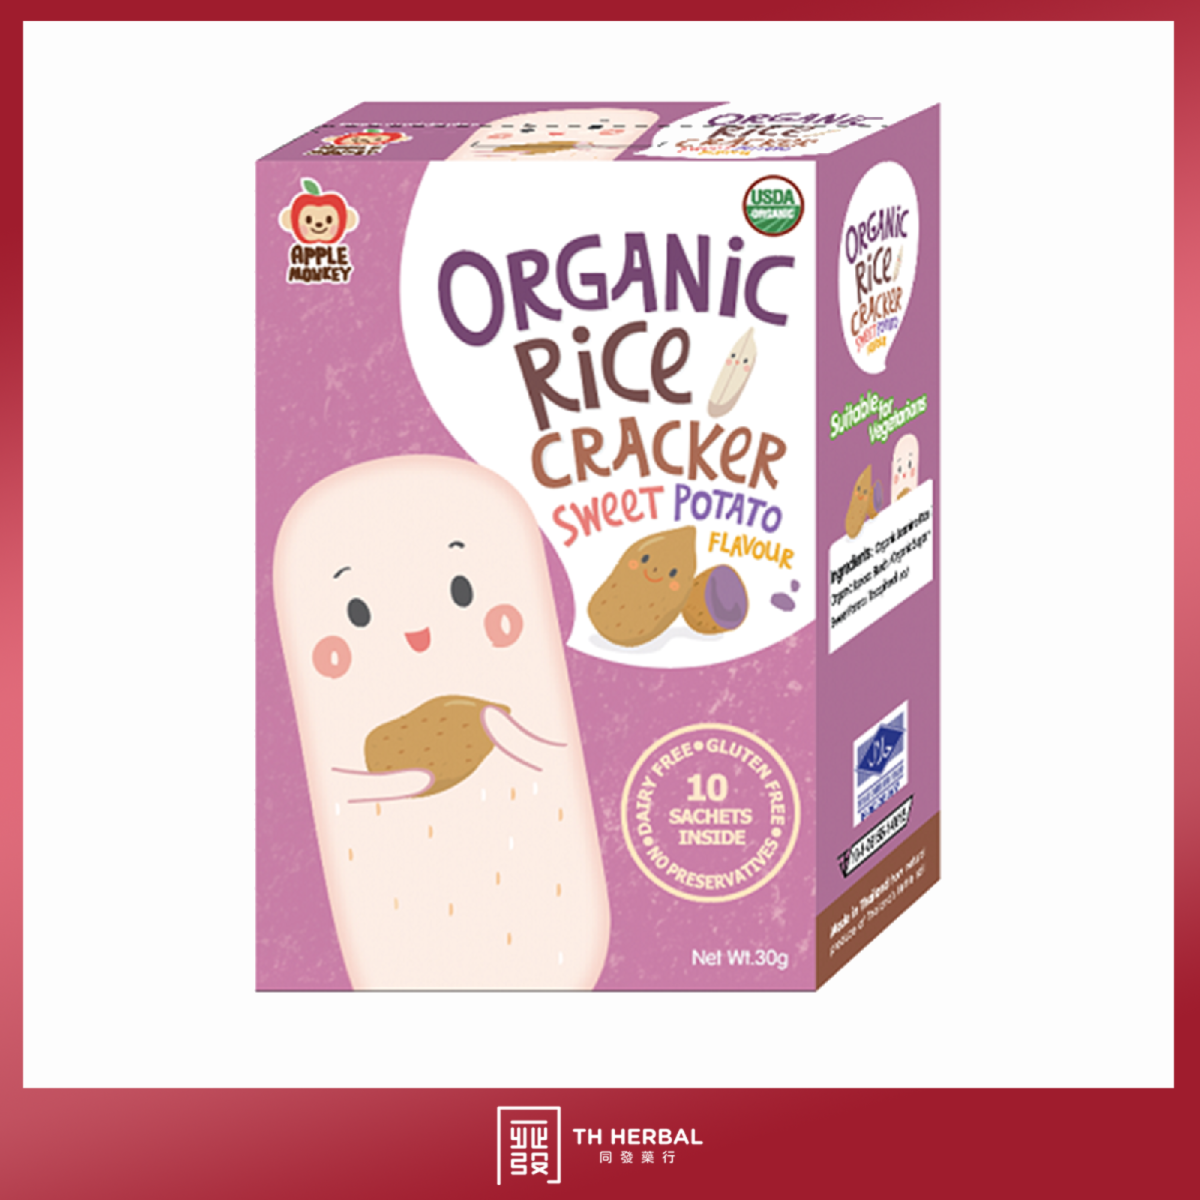 Apple Monkey Organic Rice Cracker (2).png